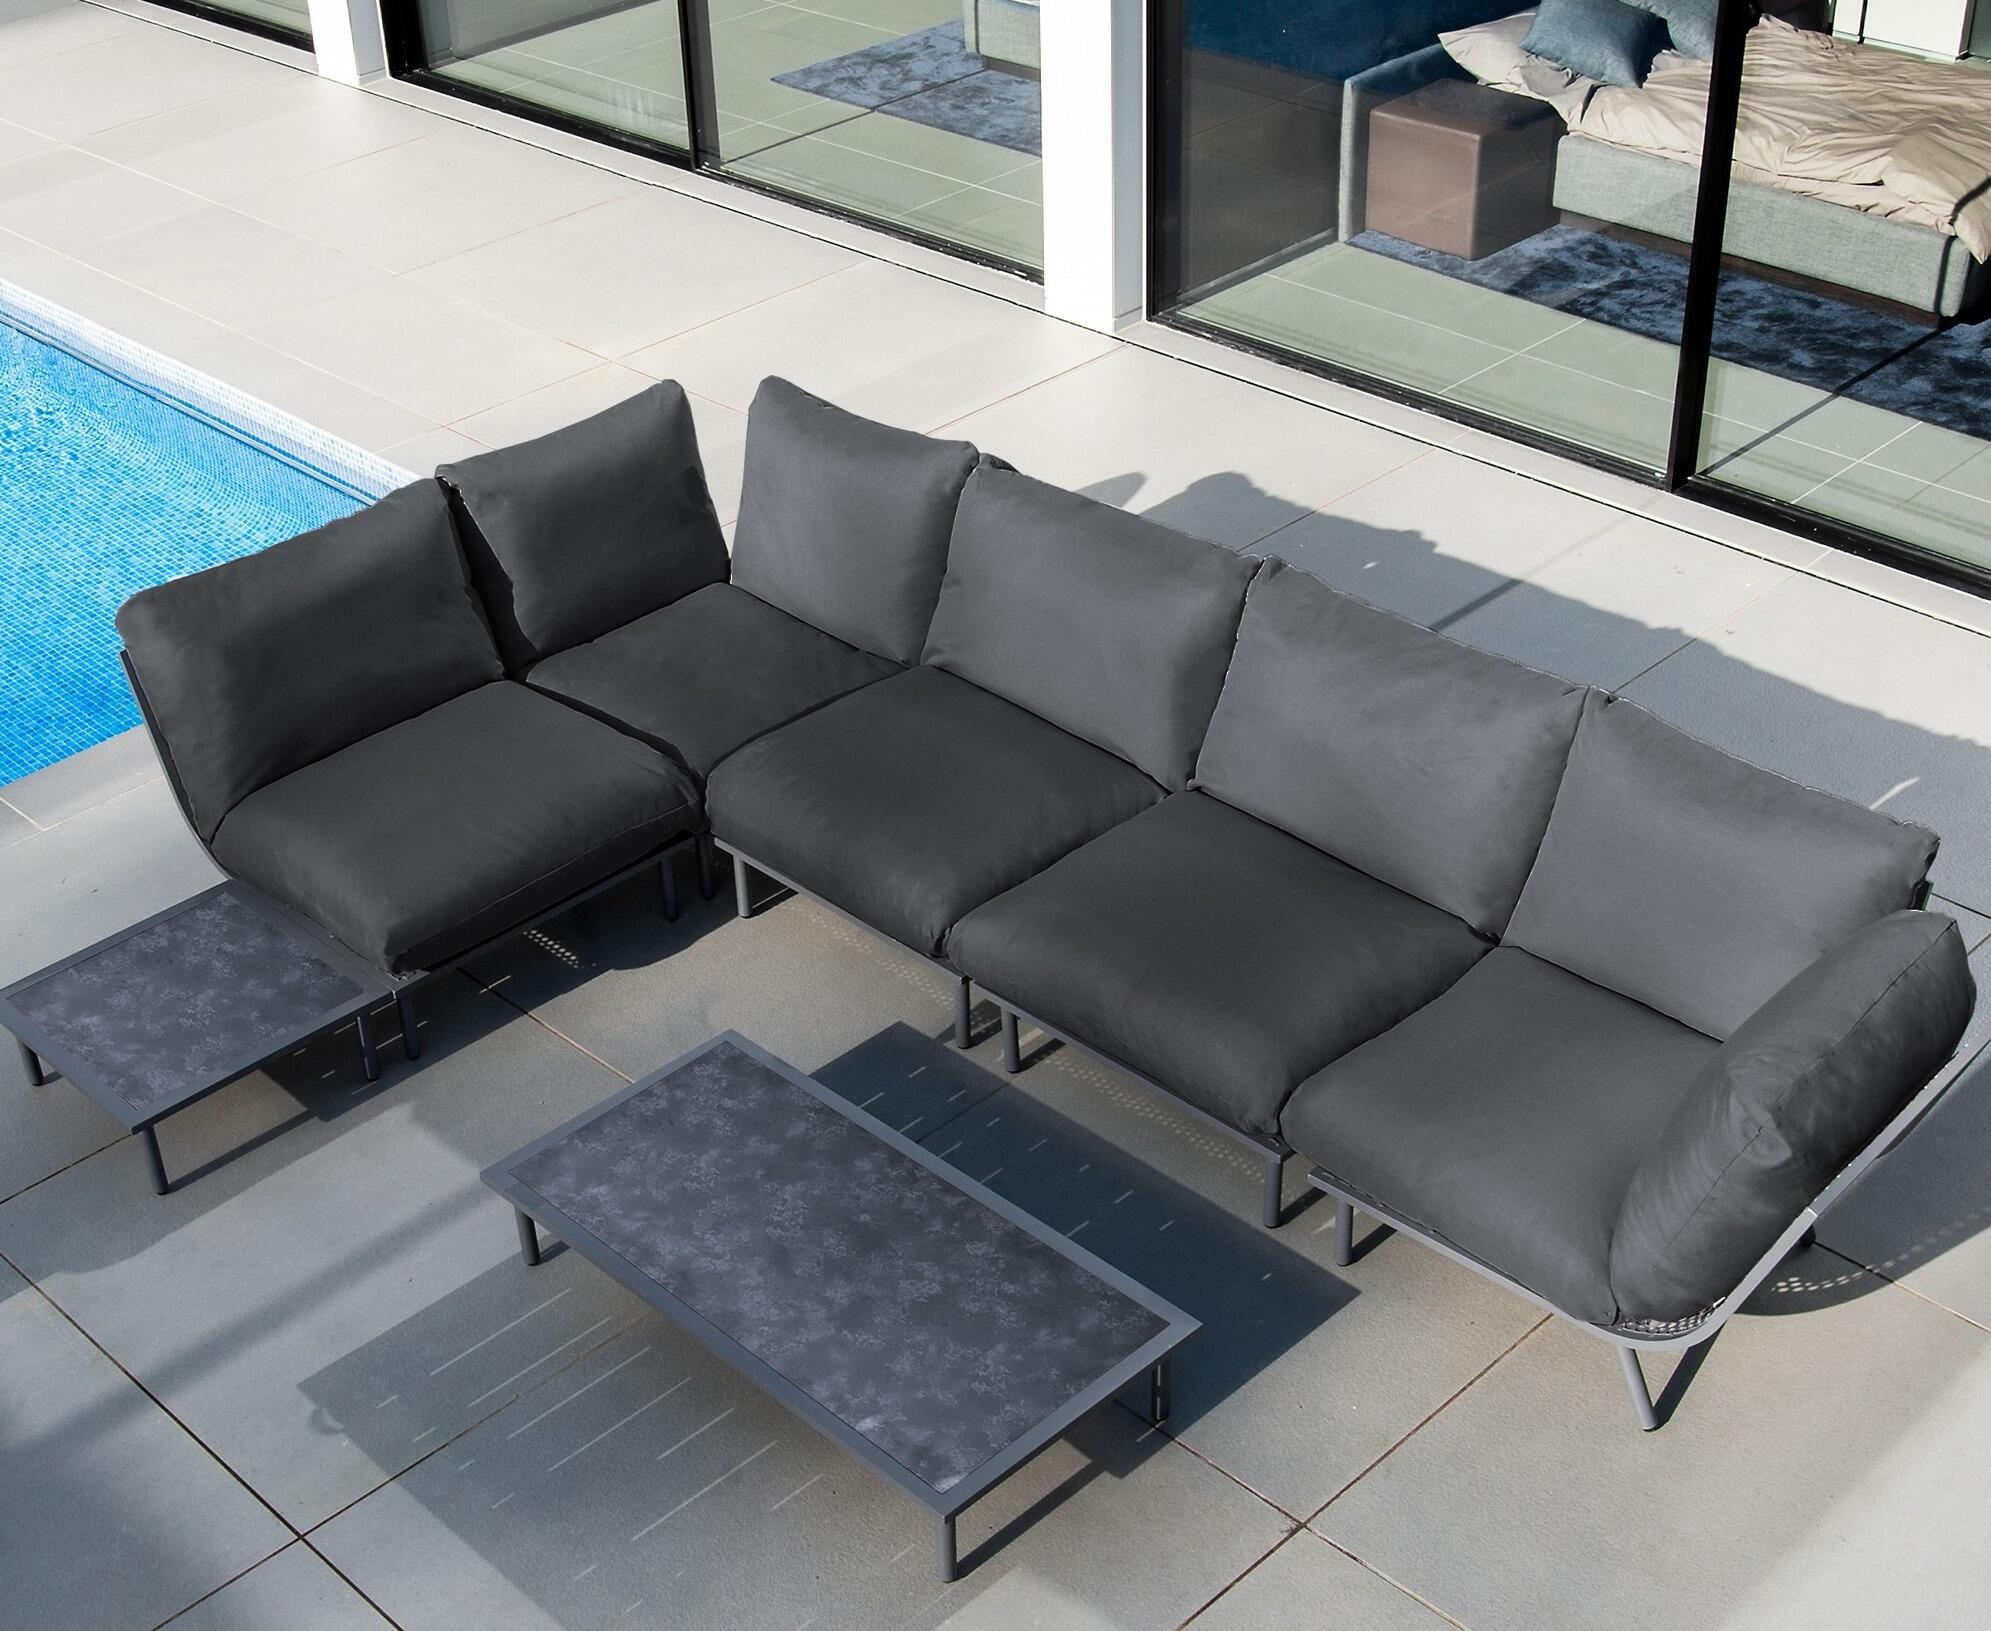 modular garden lounge sofa set grey all weather cushions metal frames patio lounging beach